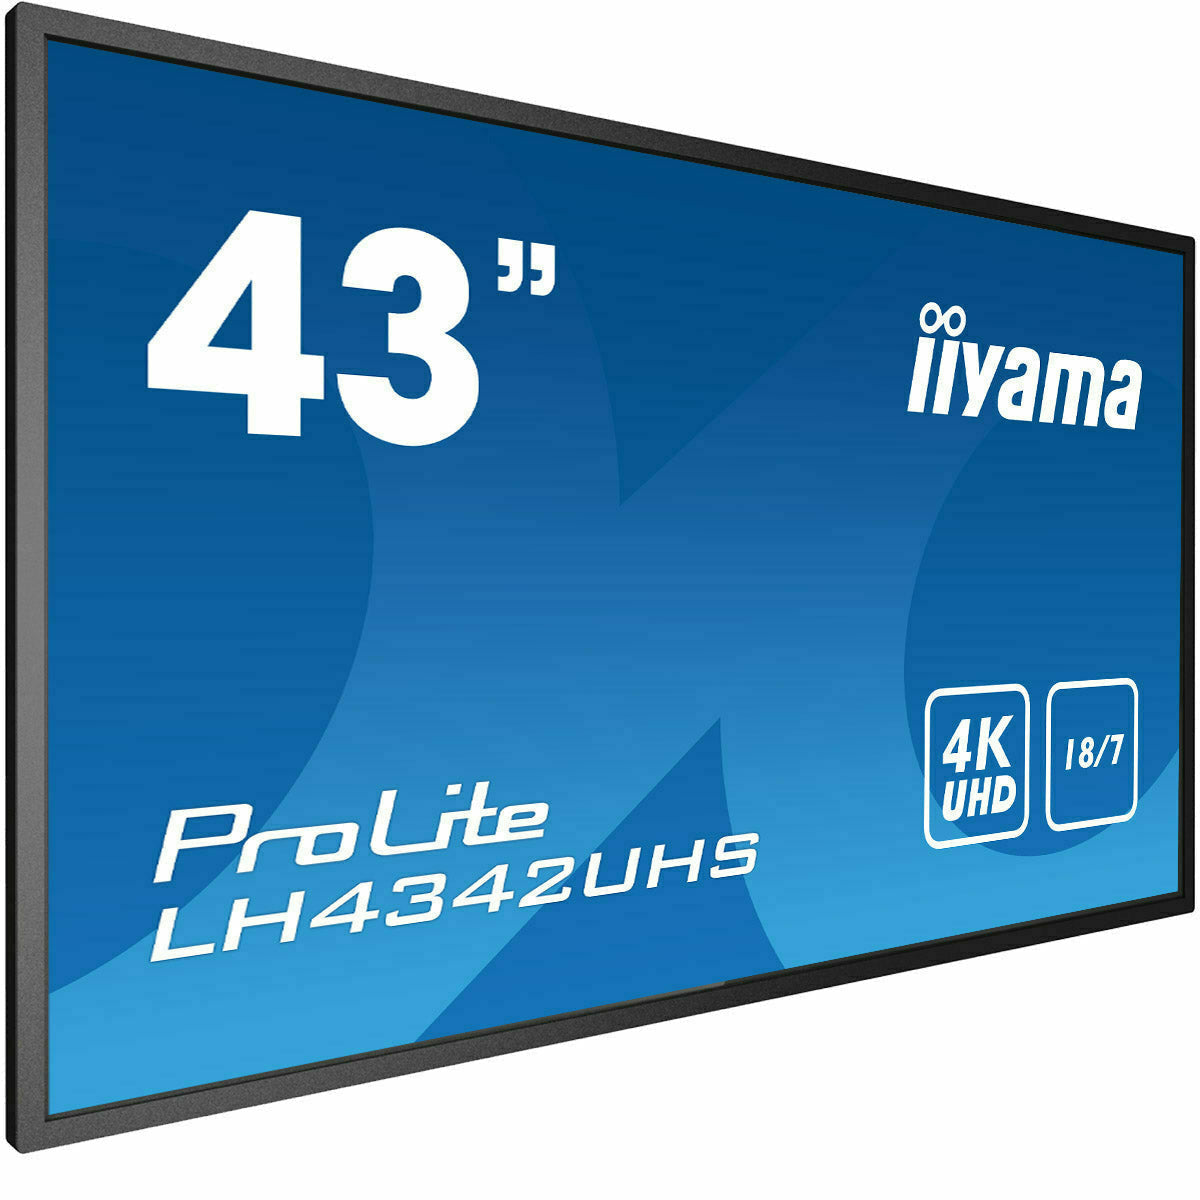 iiyama ProLite LH4342UHS-B3 43" IPS 4K LFD 18/7 with Android 8.0 and iiyama N-sign integrated Signage Platform